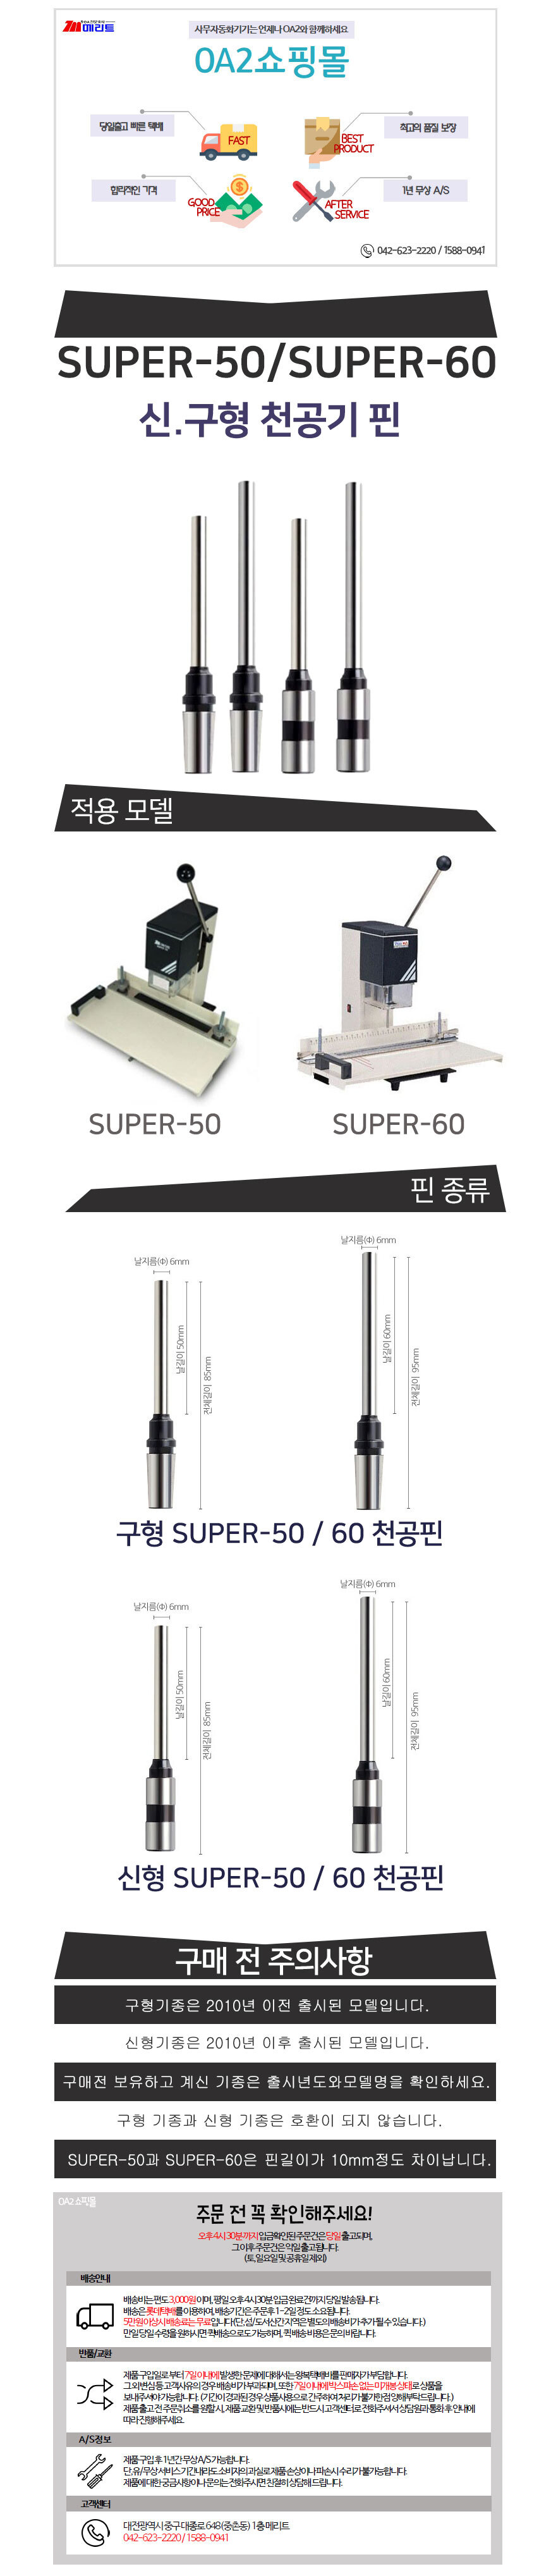 SUPER-50%20SUPER-60-PINNY.jpg